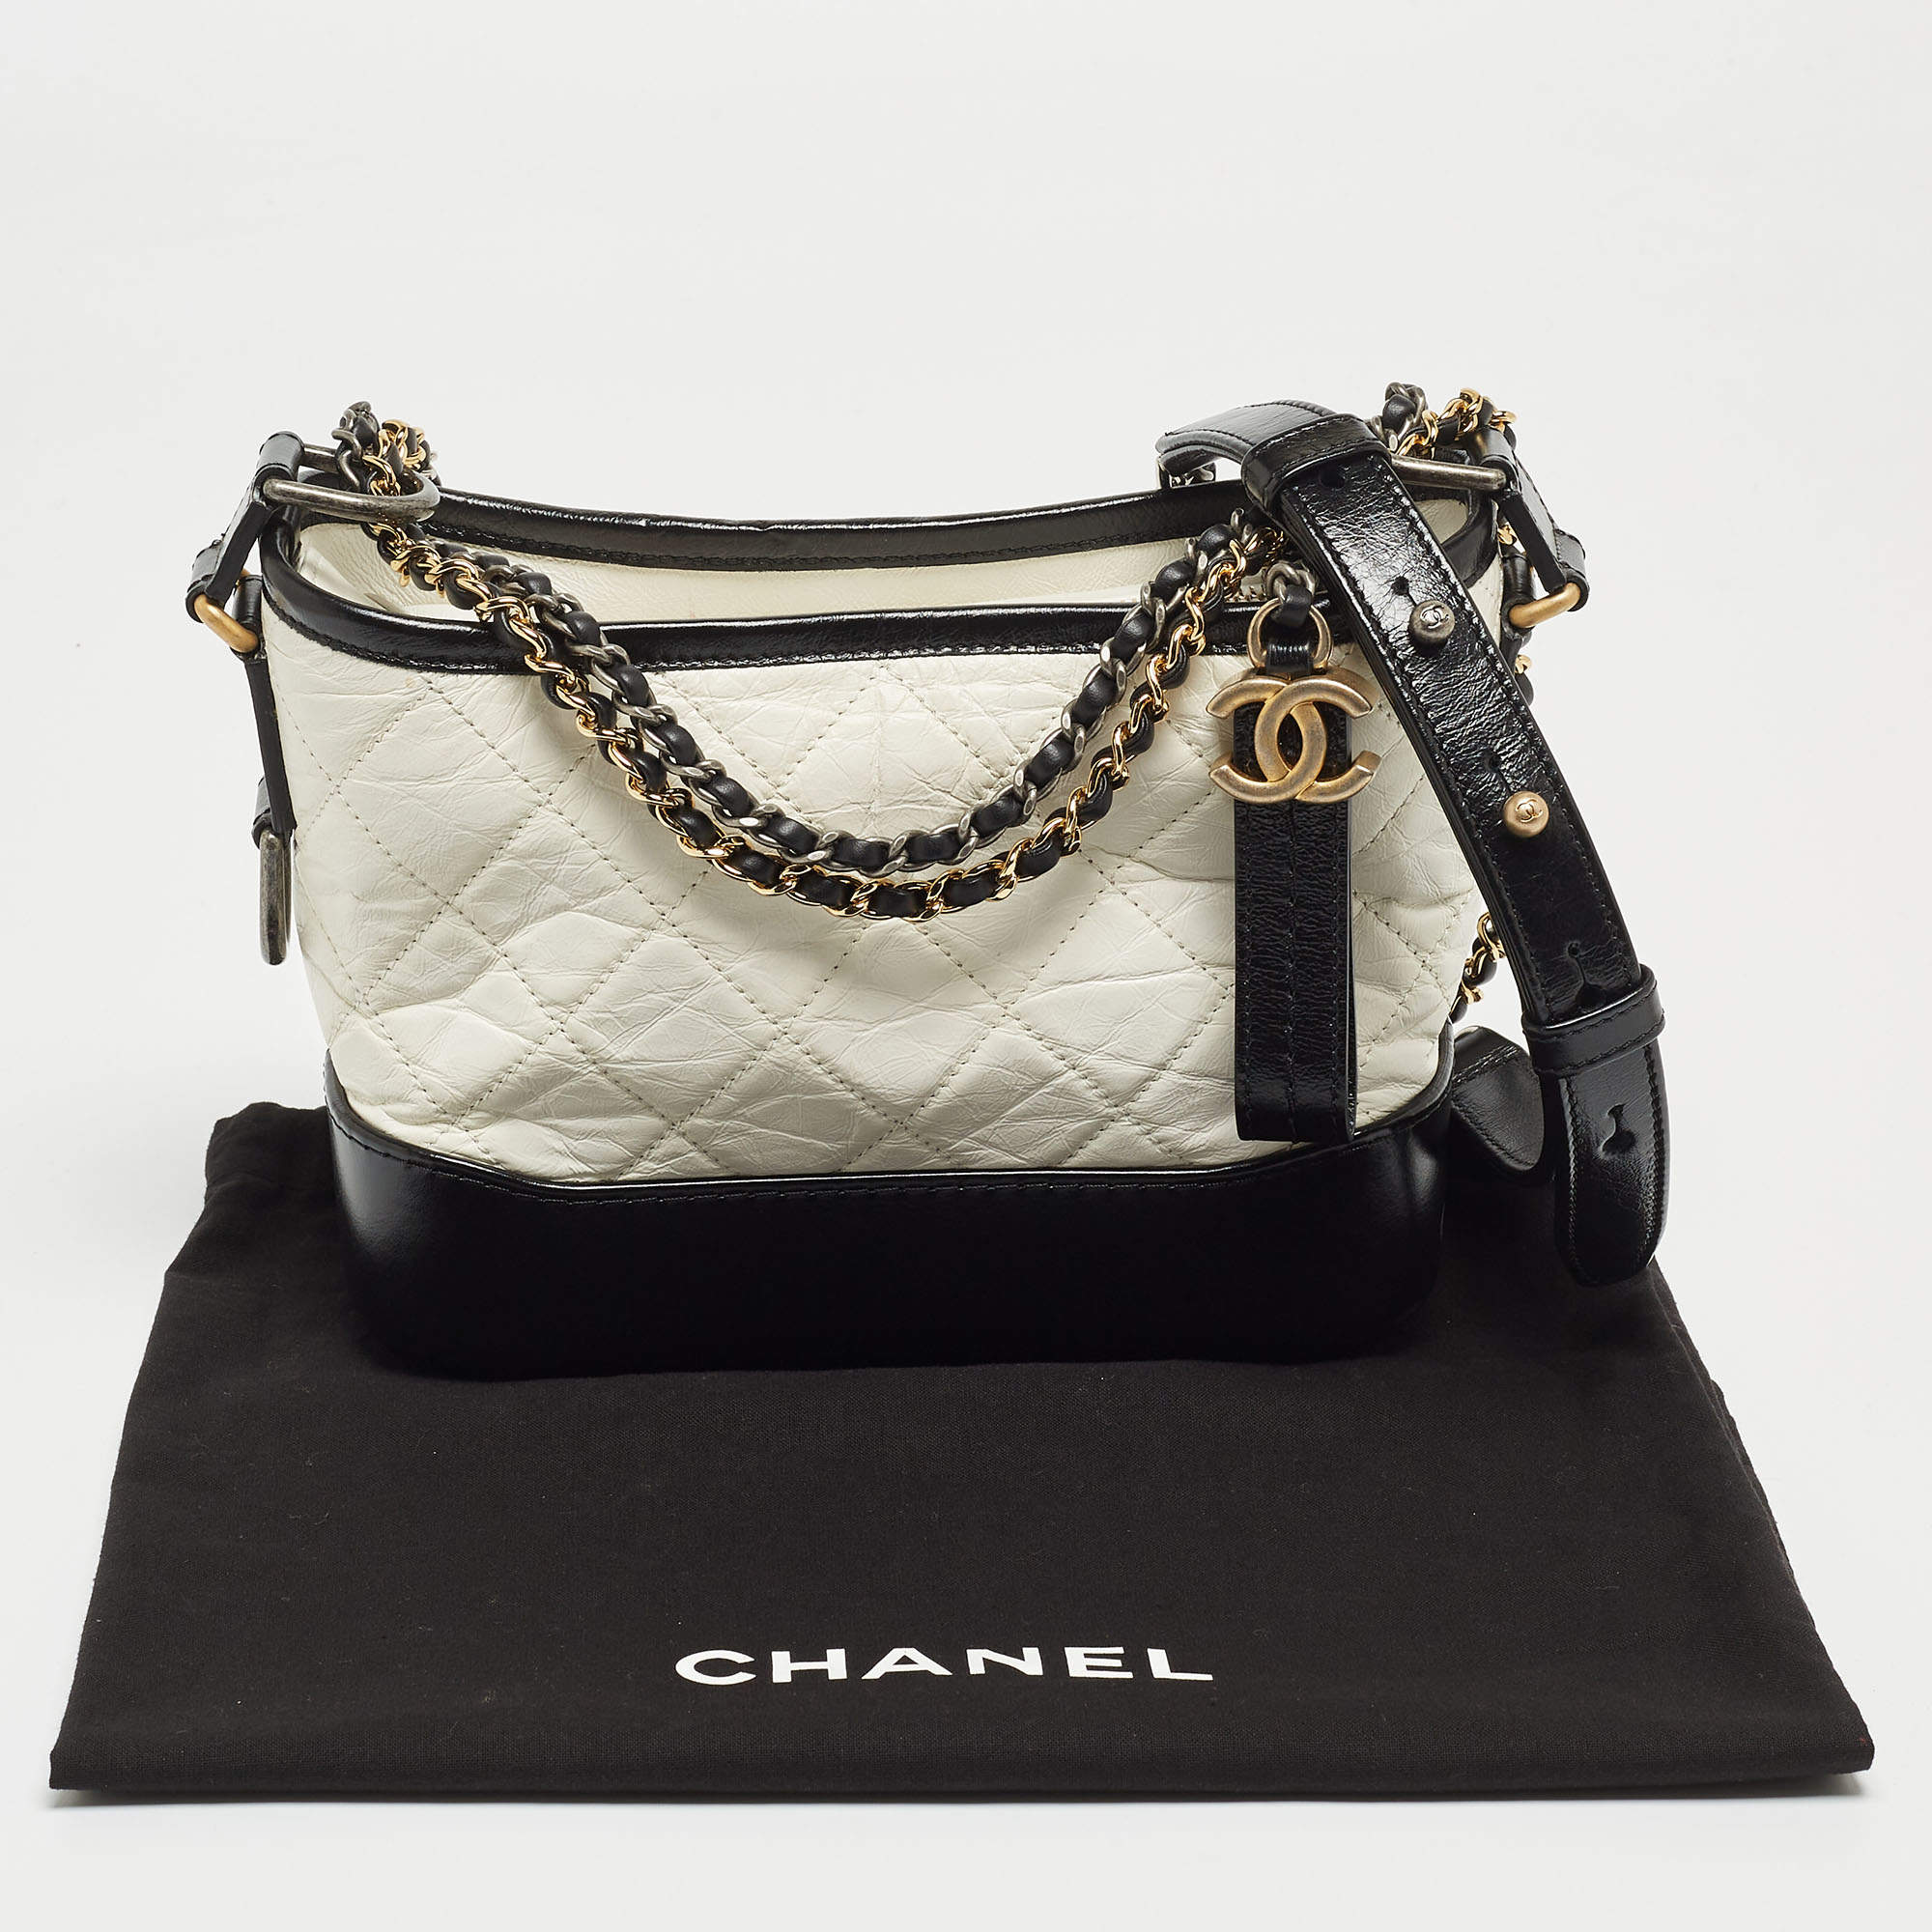 chanel gabrielle bag white and black